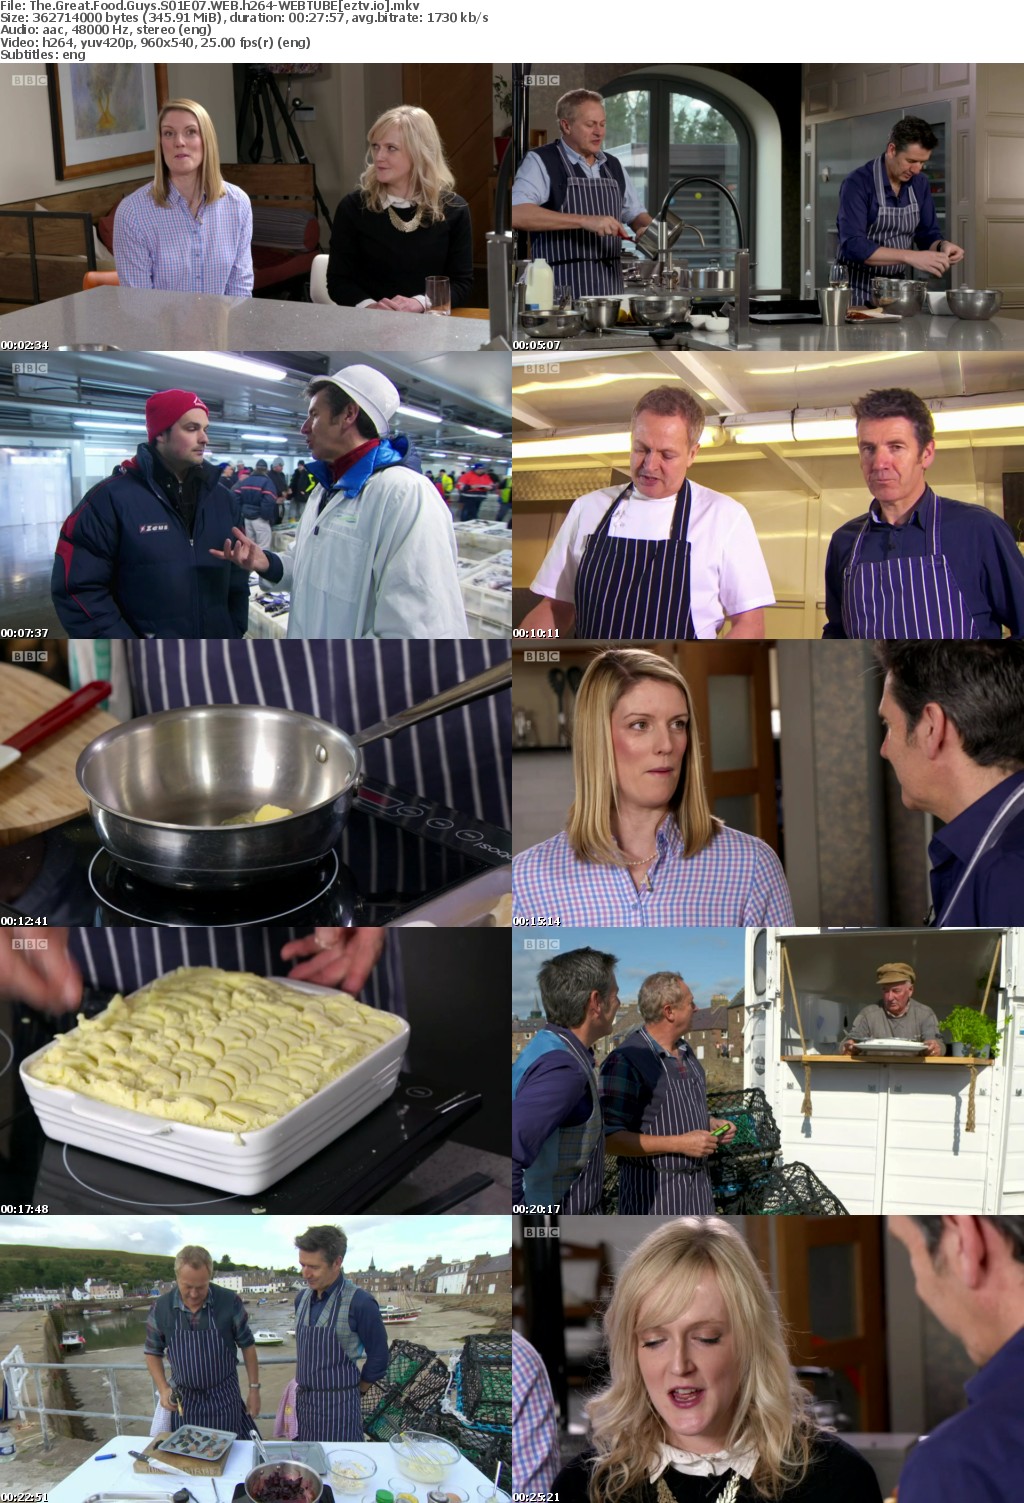 The Great Food Guys S01E07 WEB h264-WEBTUBE